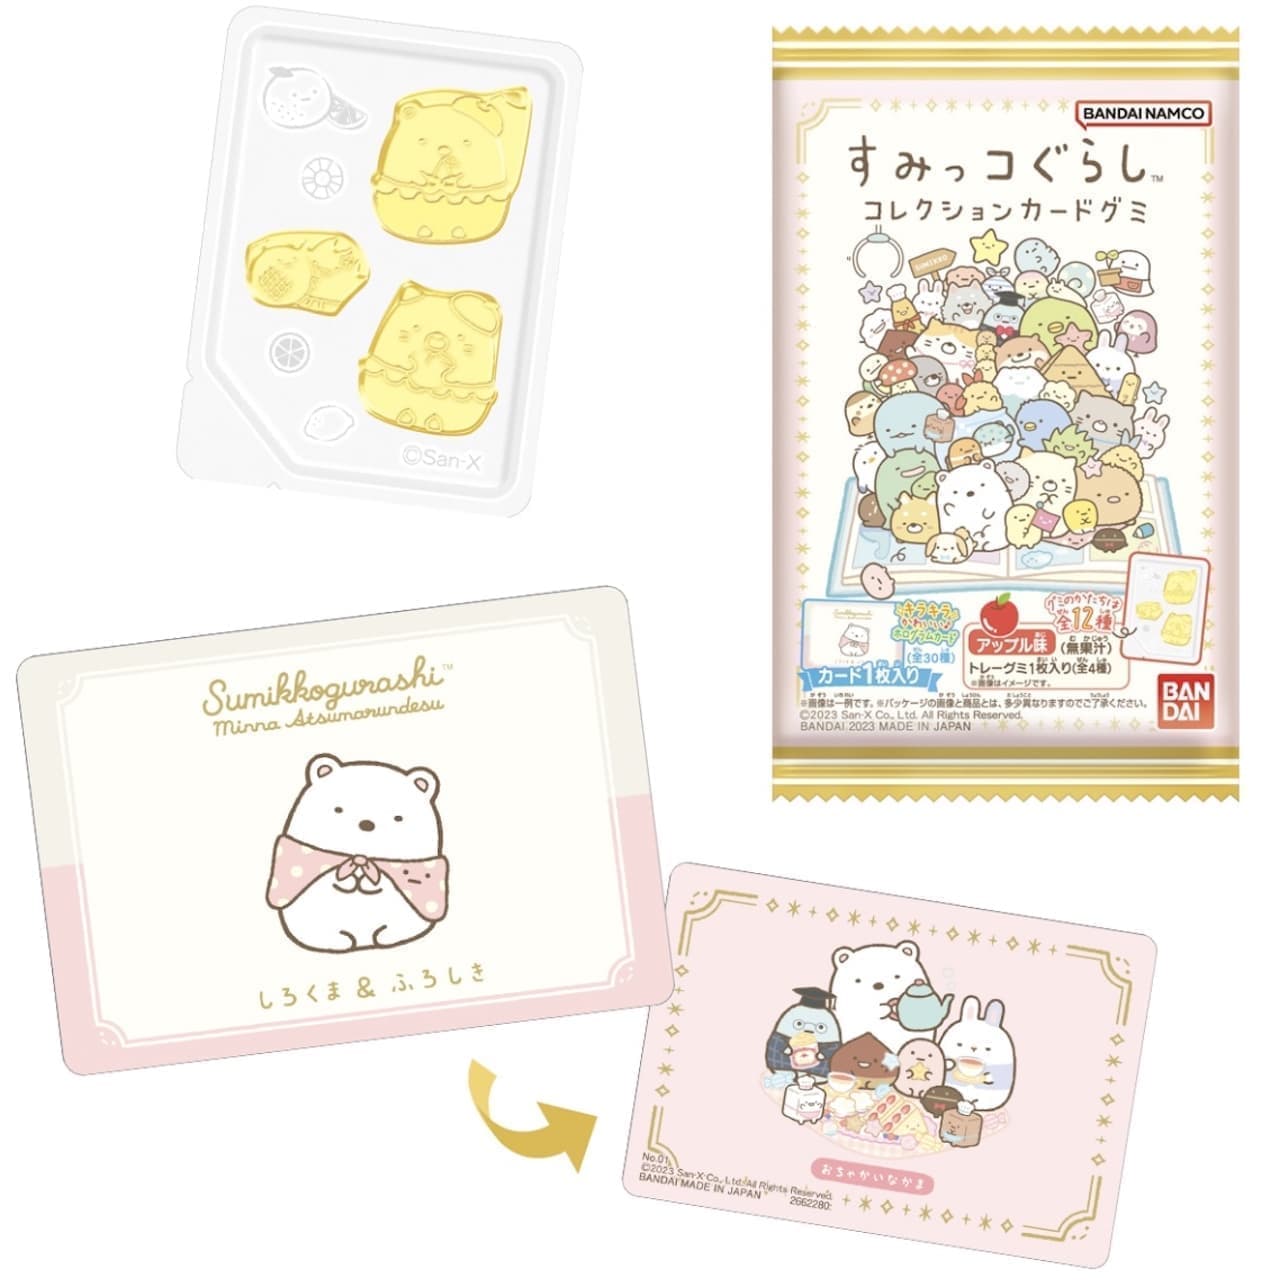 Bandai Candy Division "Sumikko Gurashi Collection Card Gummies